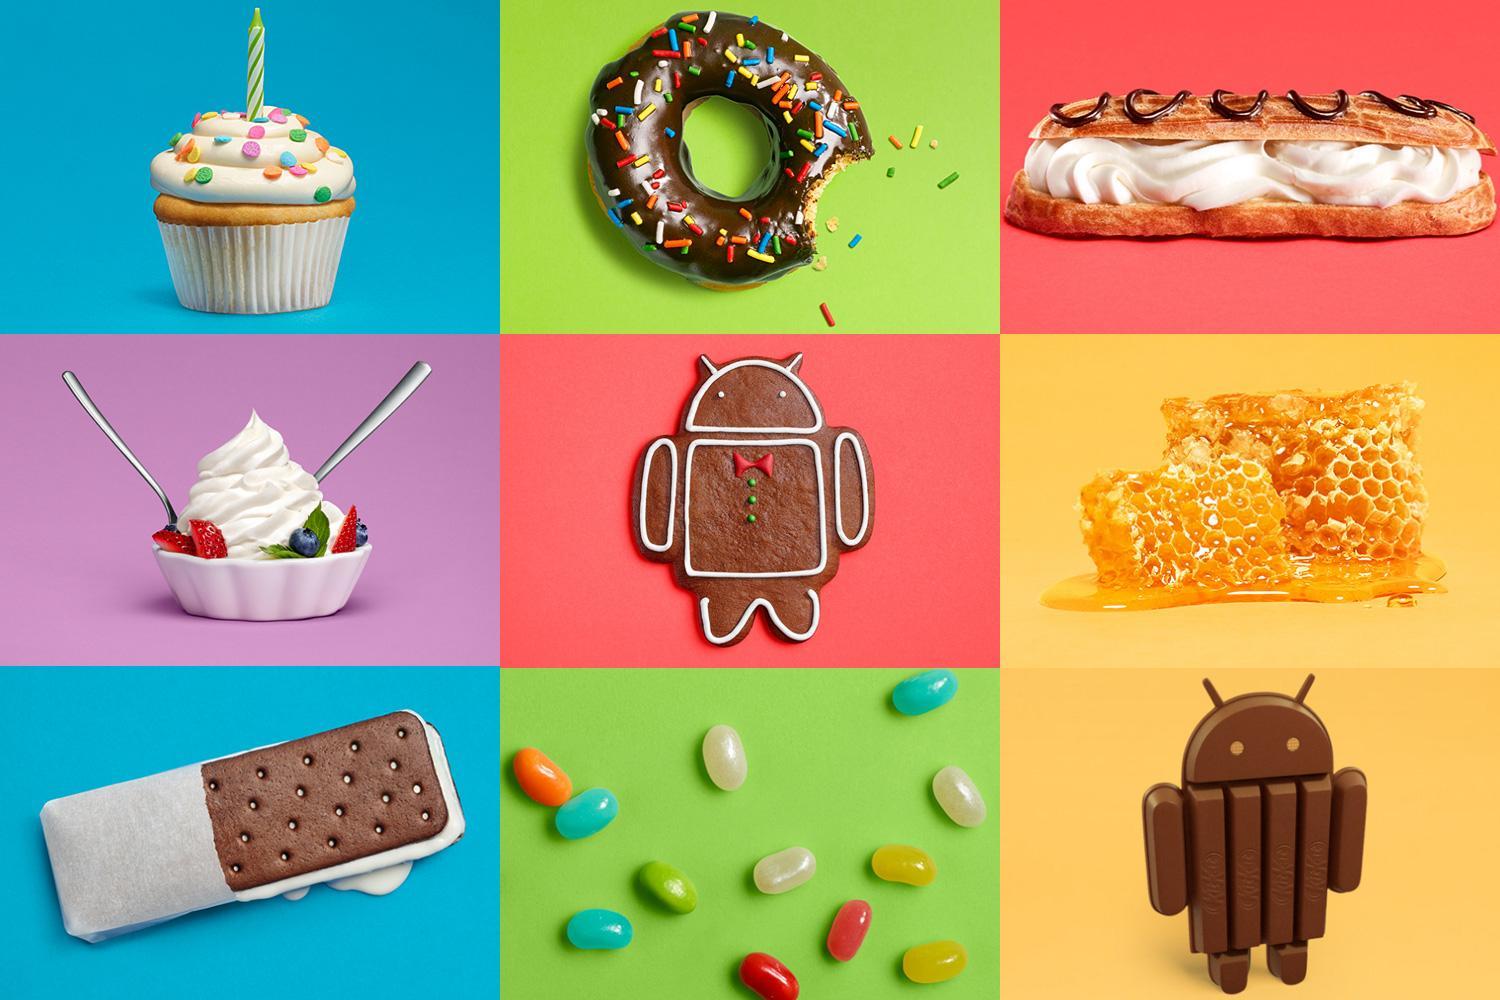 versiones android | Android | Google อัพเดทยอดผู้ใช้งาน Android เวอร์ชั่นต่างๆ Lollipop ขึ้นแท่นมีผู้ใช้เยอะที่สุดแล้ว